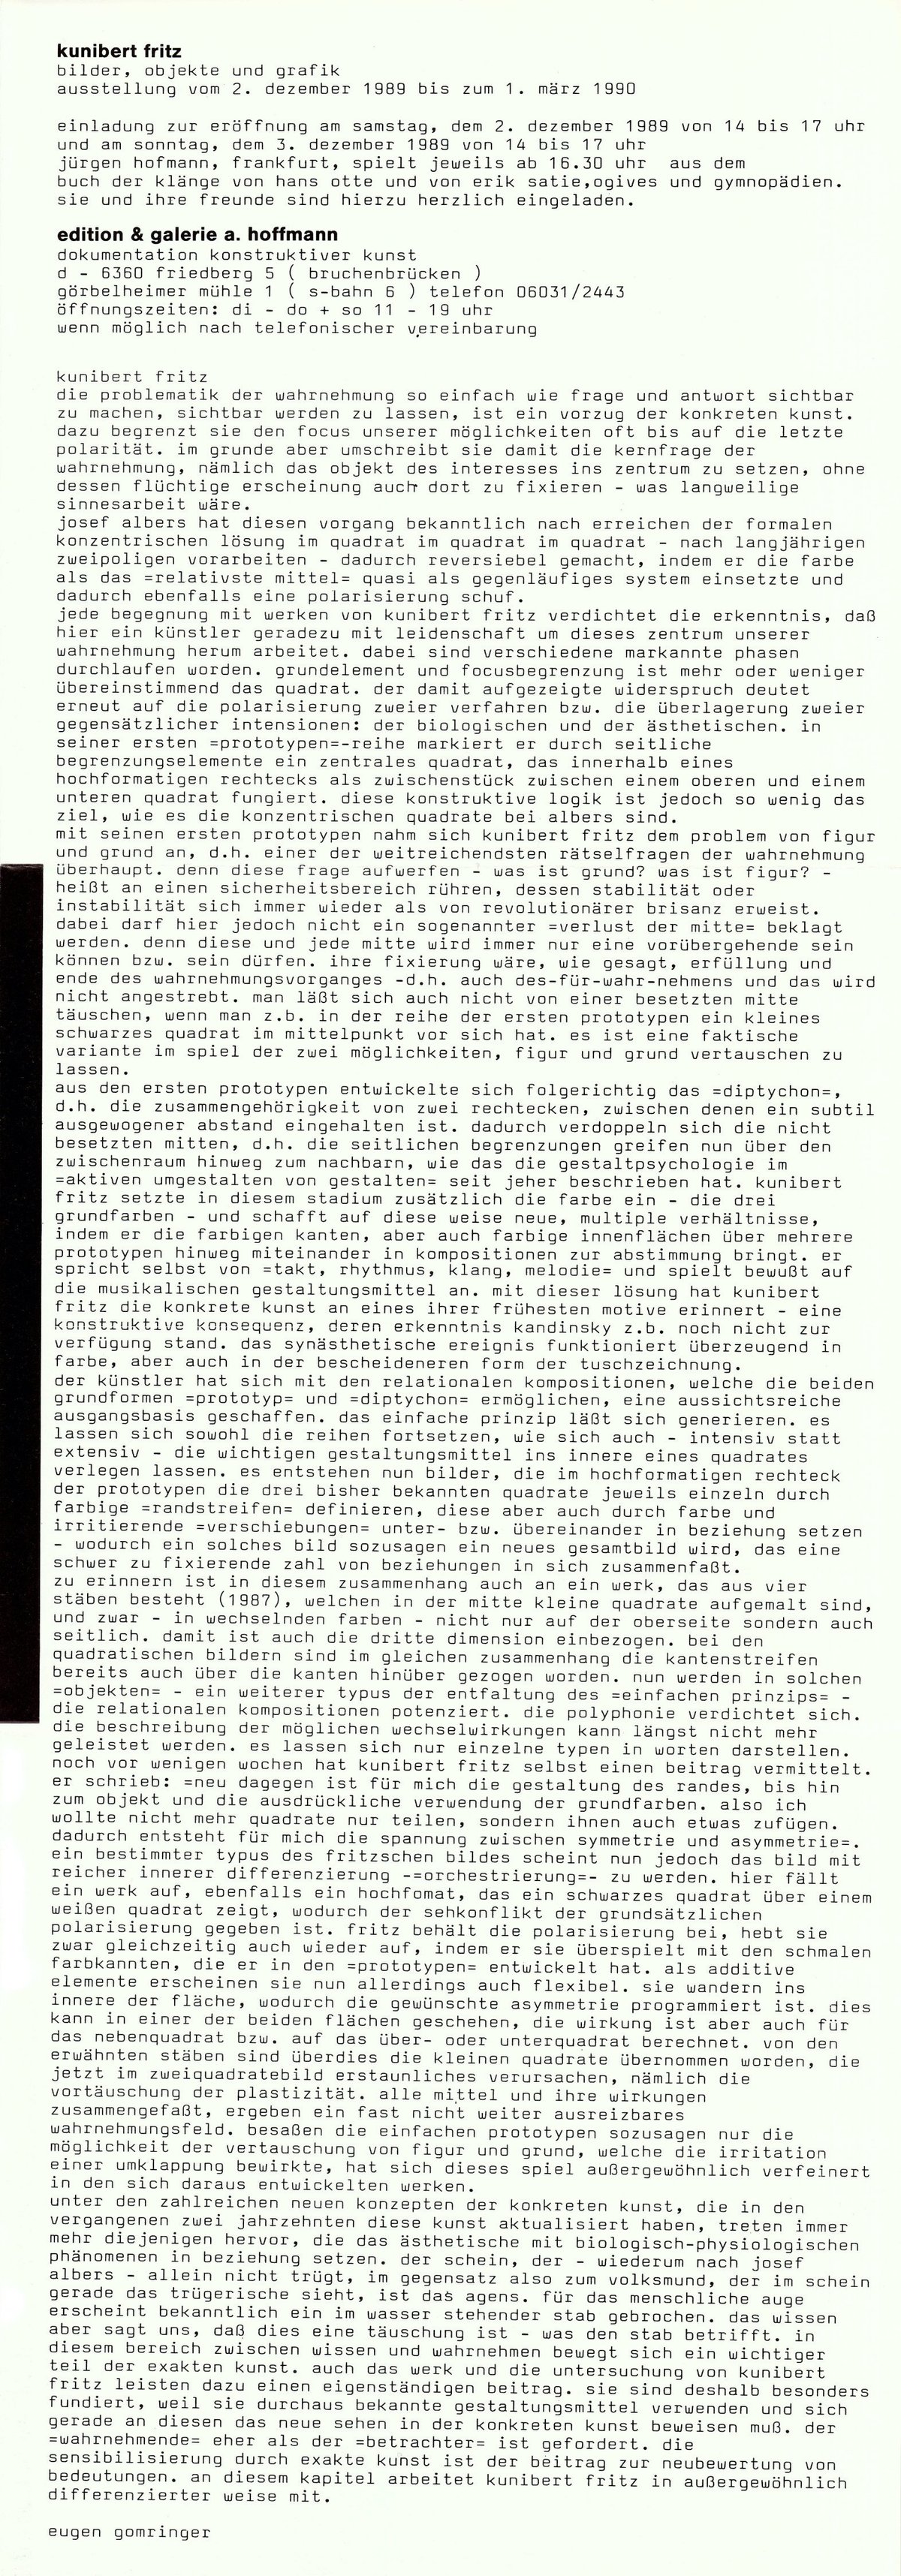 exhibition invitation unfolded halfway: &quot;kunibert fritz—bilder, objekte und grafik&quot;, designed by wolfgang schmidt, with a text by eugen gomringer